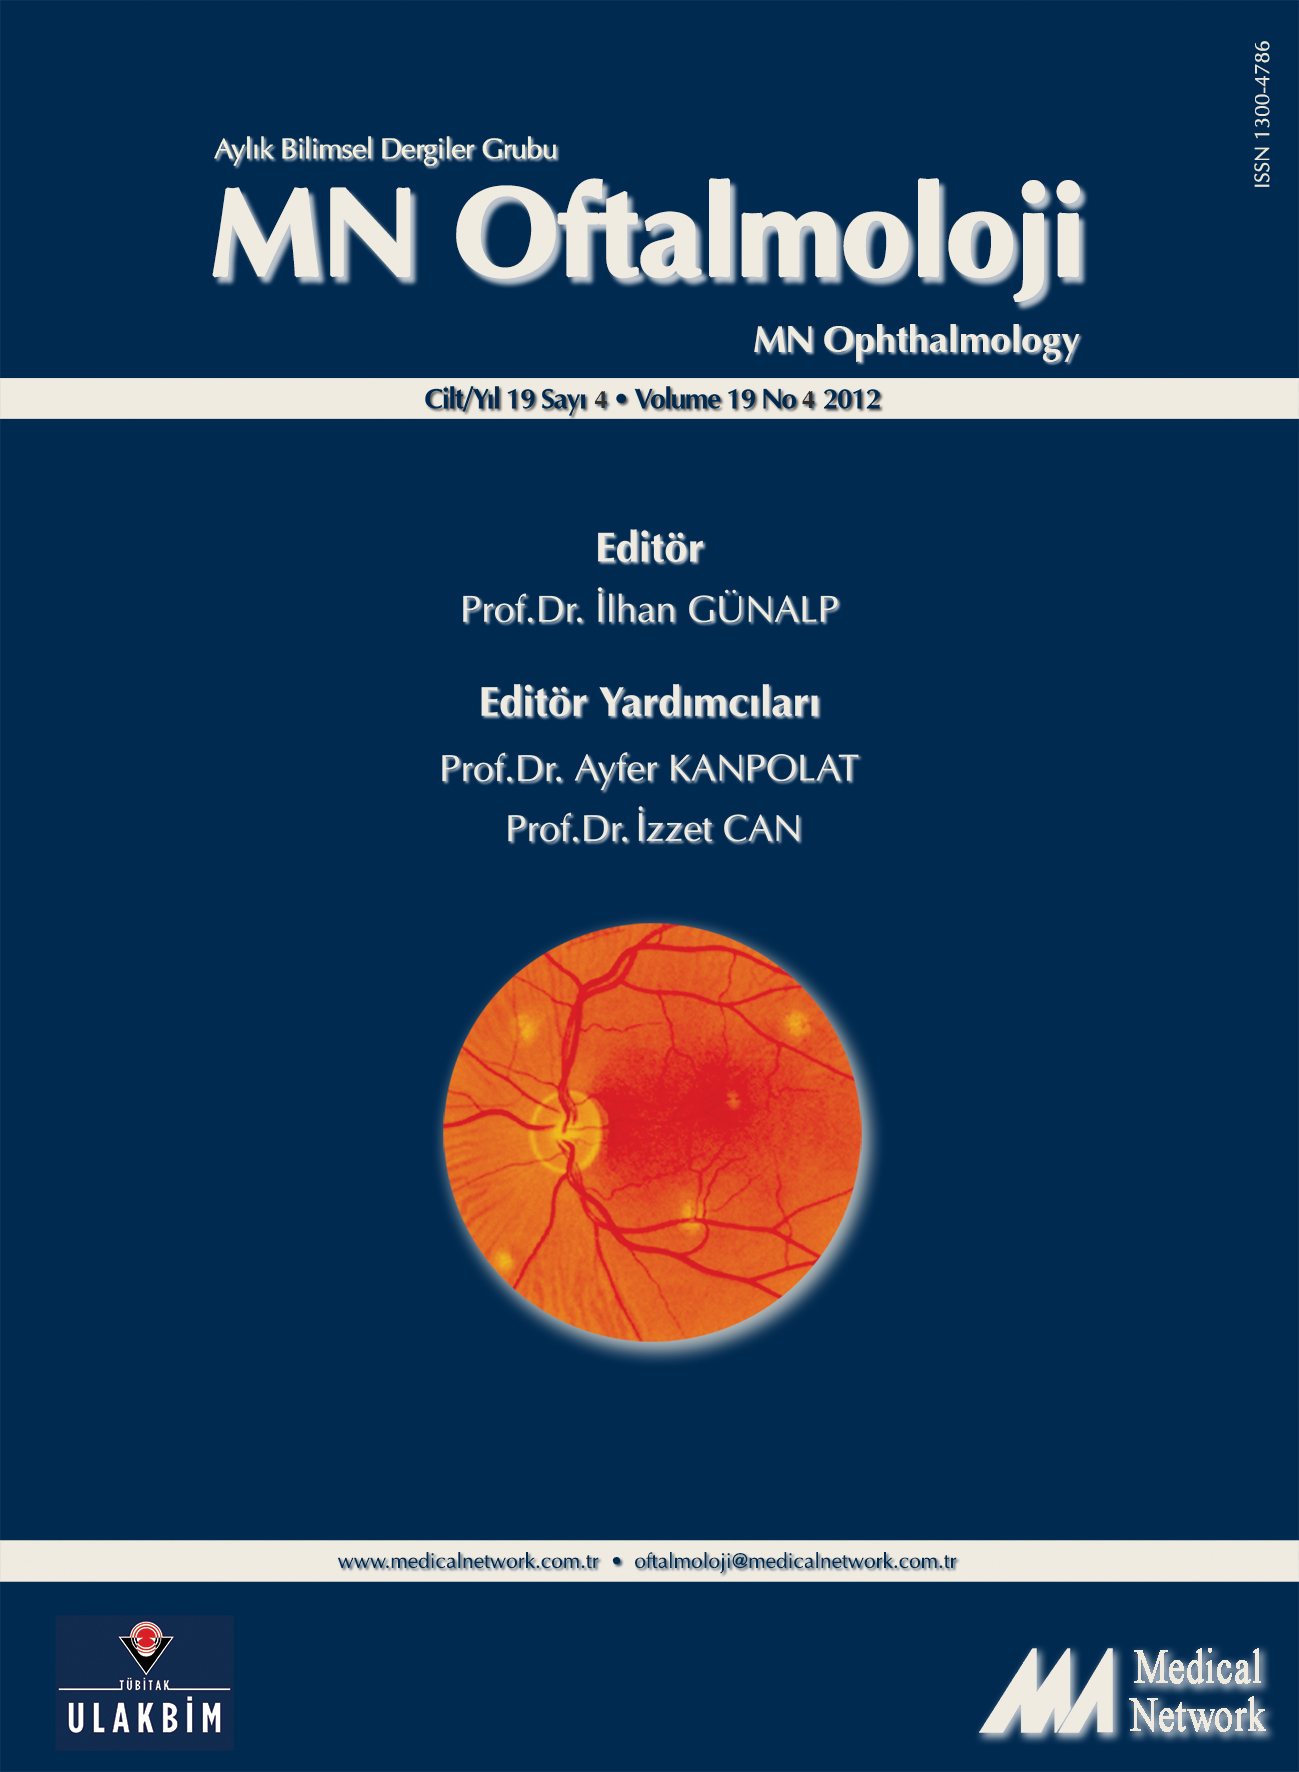 <p>MN Oftalmoloji Cilt: 19 Sayı: 4 2012 (MN Ophthalmology Volume: 19 No 4 2012)</p>